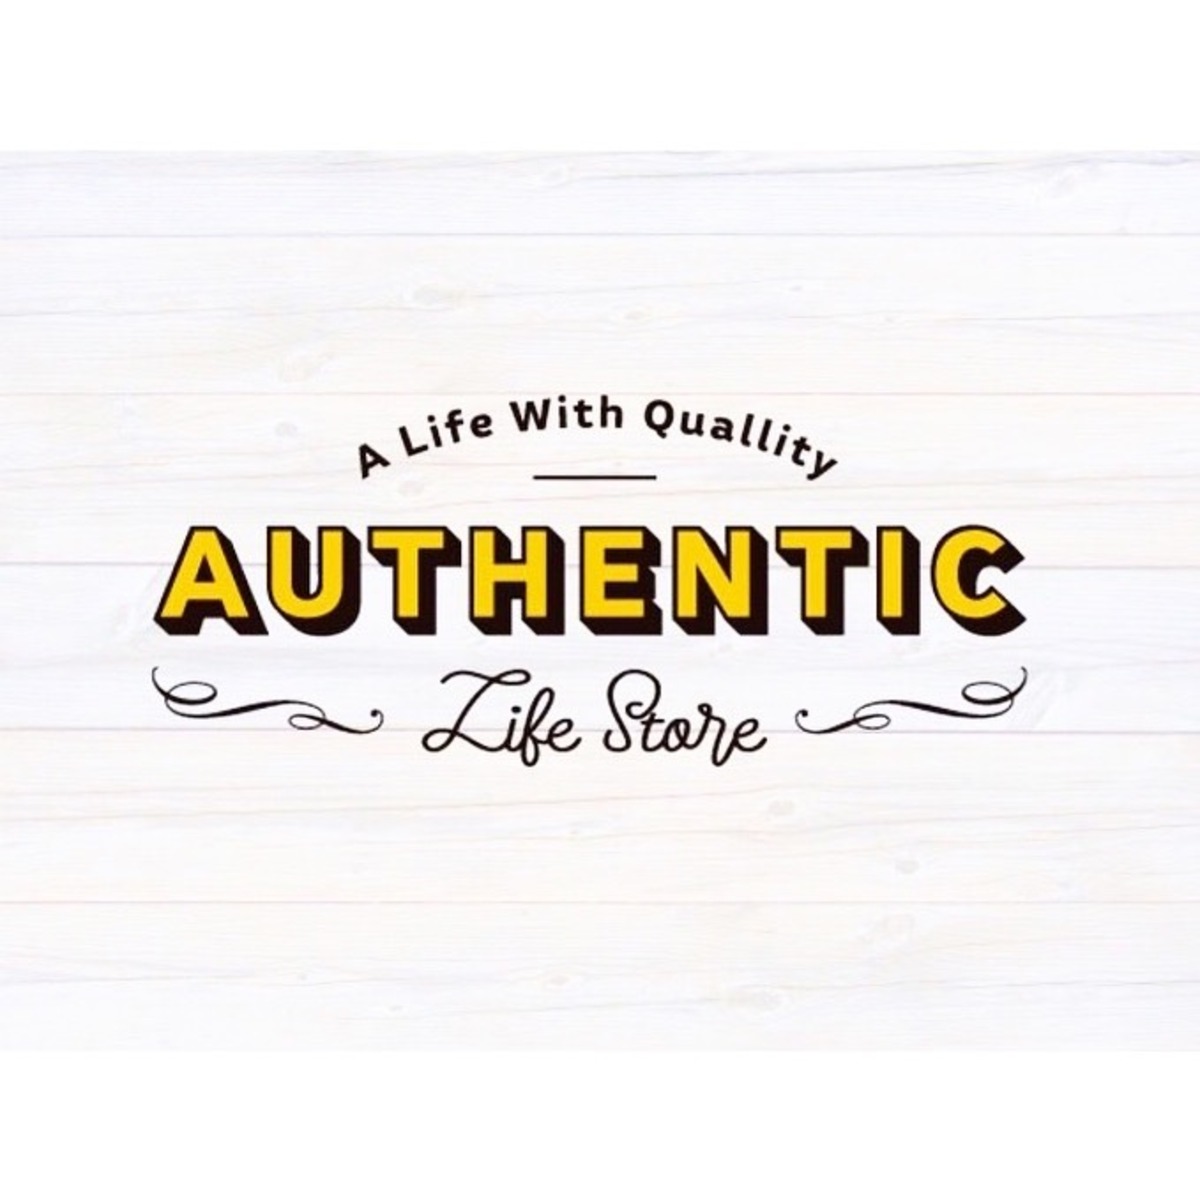 AUTHENTIC Life Store